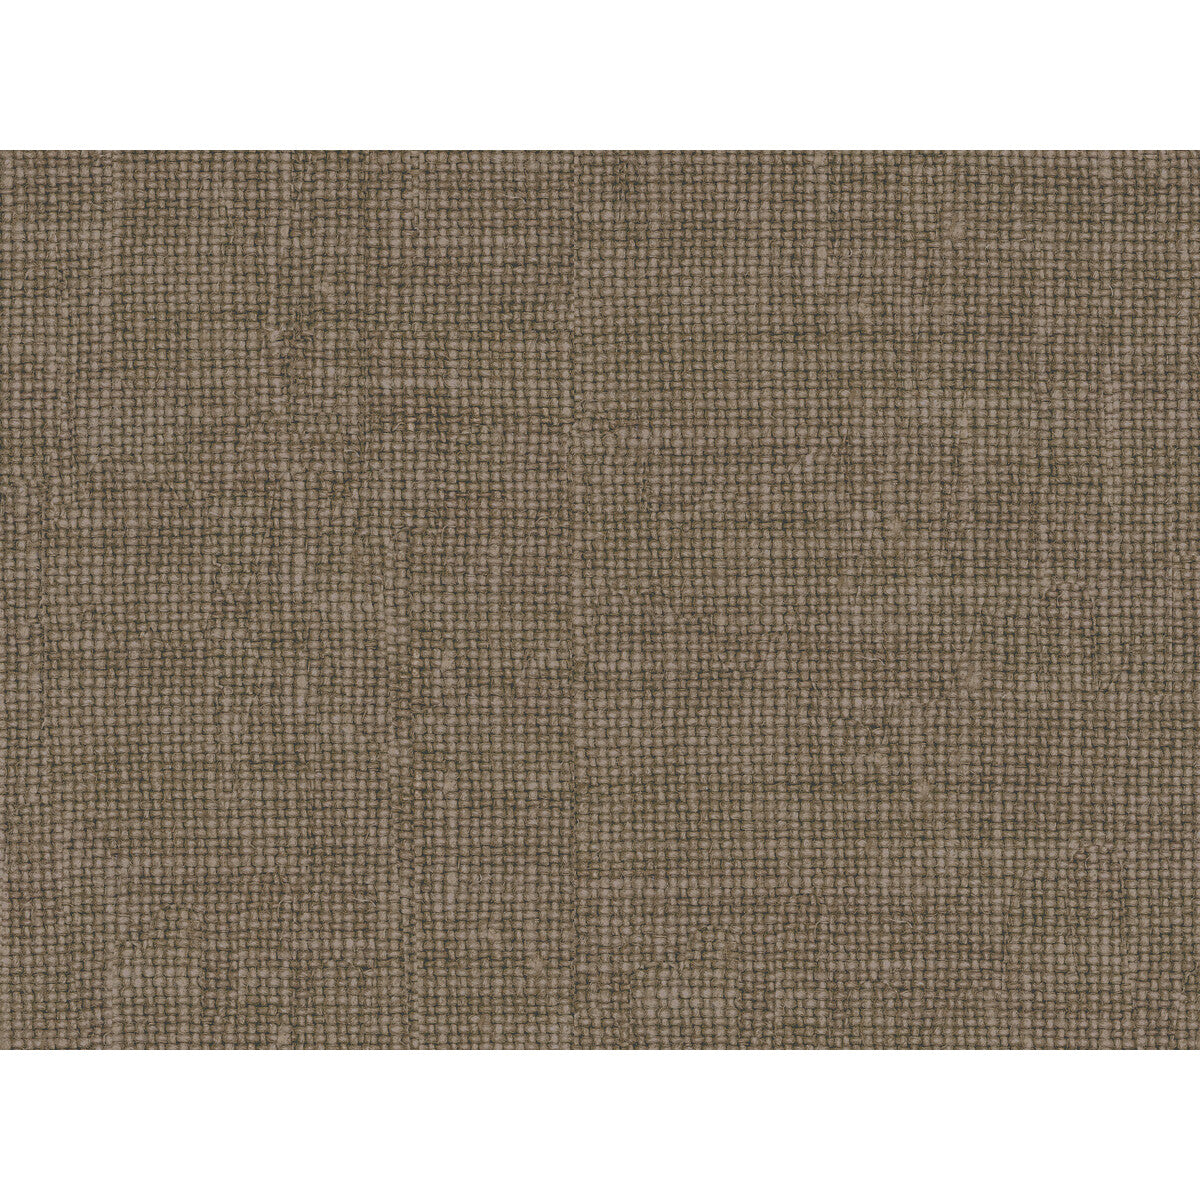 Kravet Basics fabric in 33767-316 color - pattern 33767.316.0 - by Kravet Basics in the Gis collection